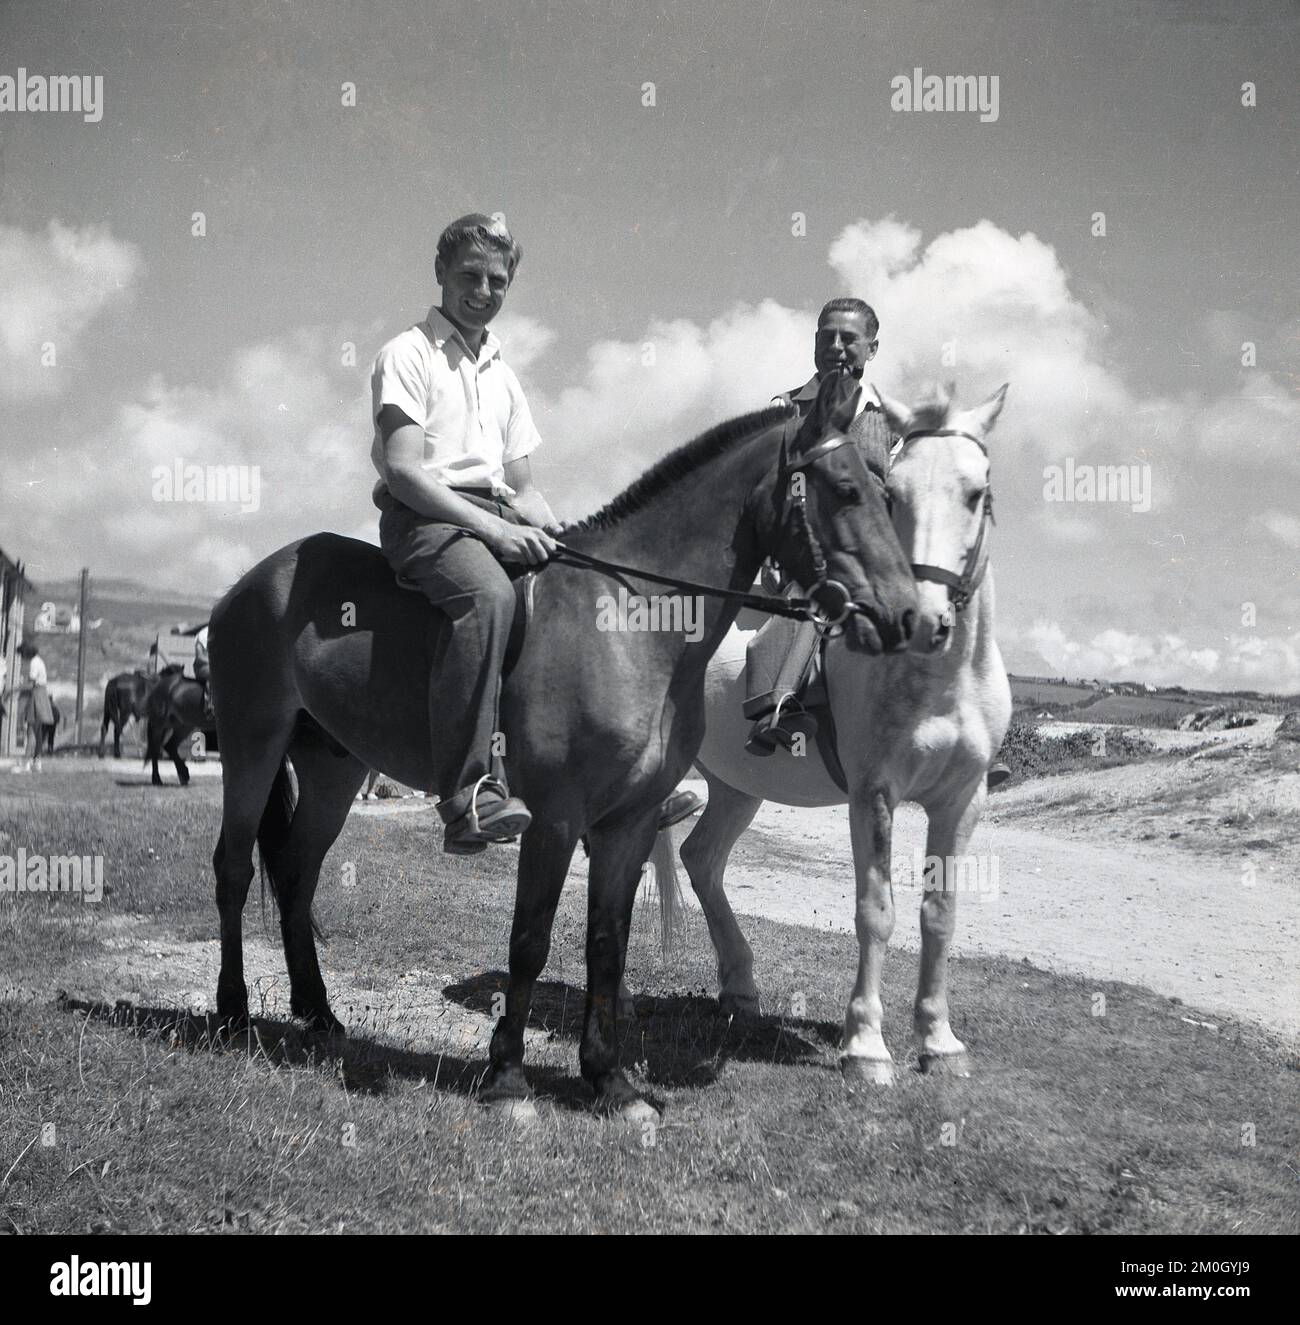 1950s, histórico, paseo de vacaciones, dos hombres a caballo en un terreno arenoso, césped en una costa, Inglaterra, Reino Unido. Foto de stock